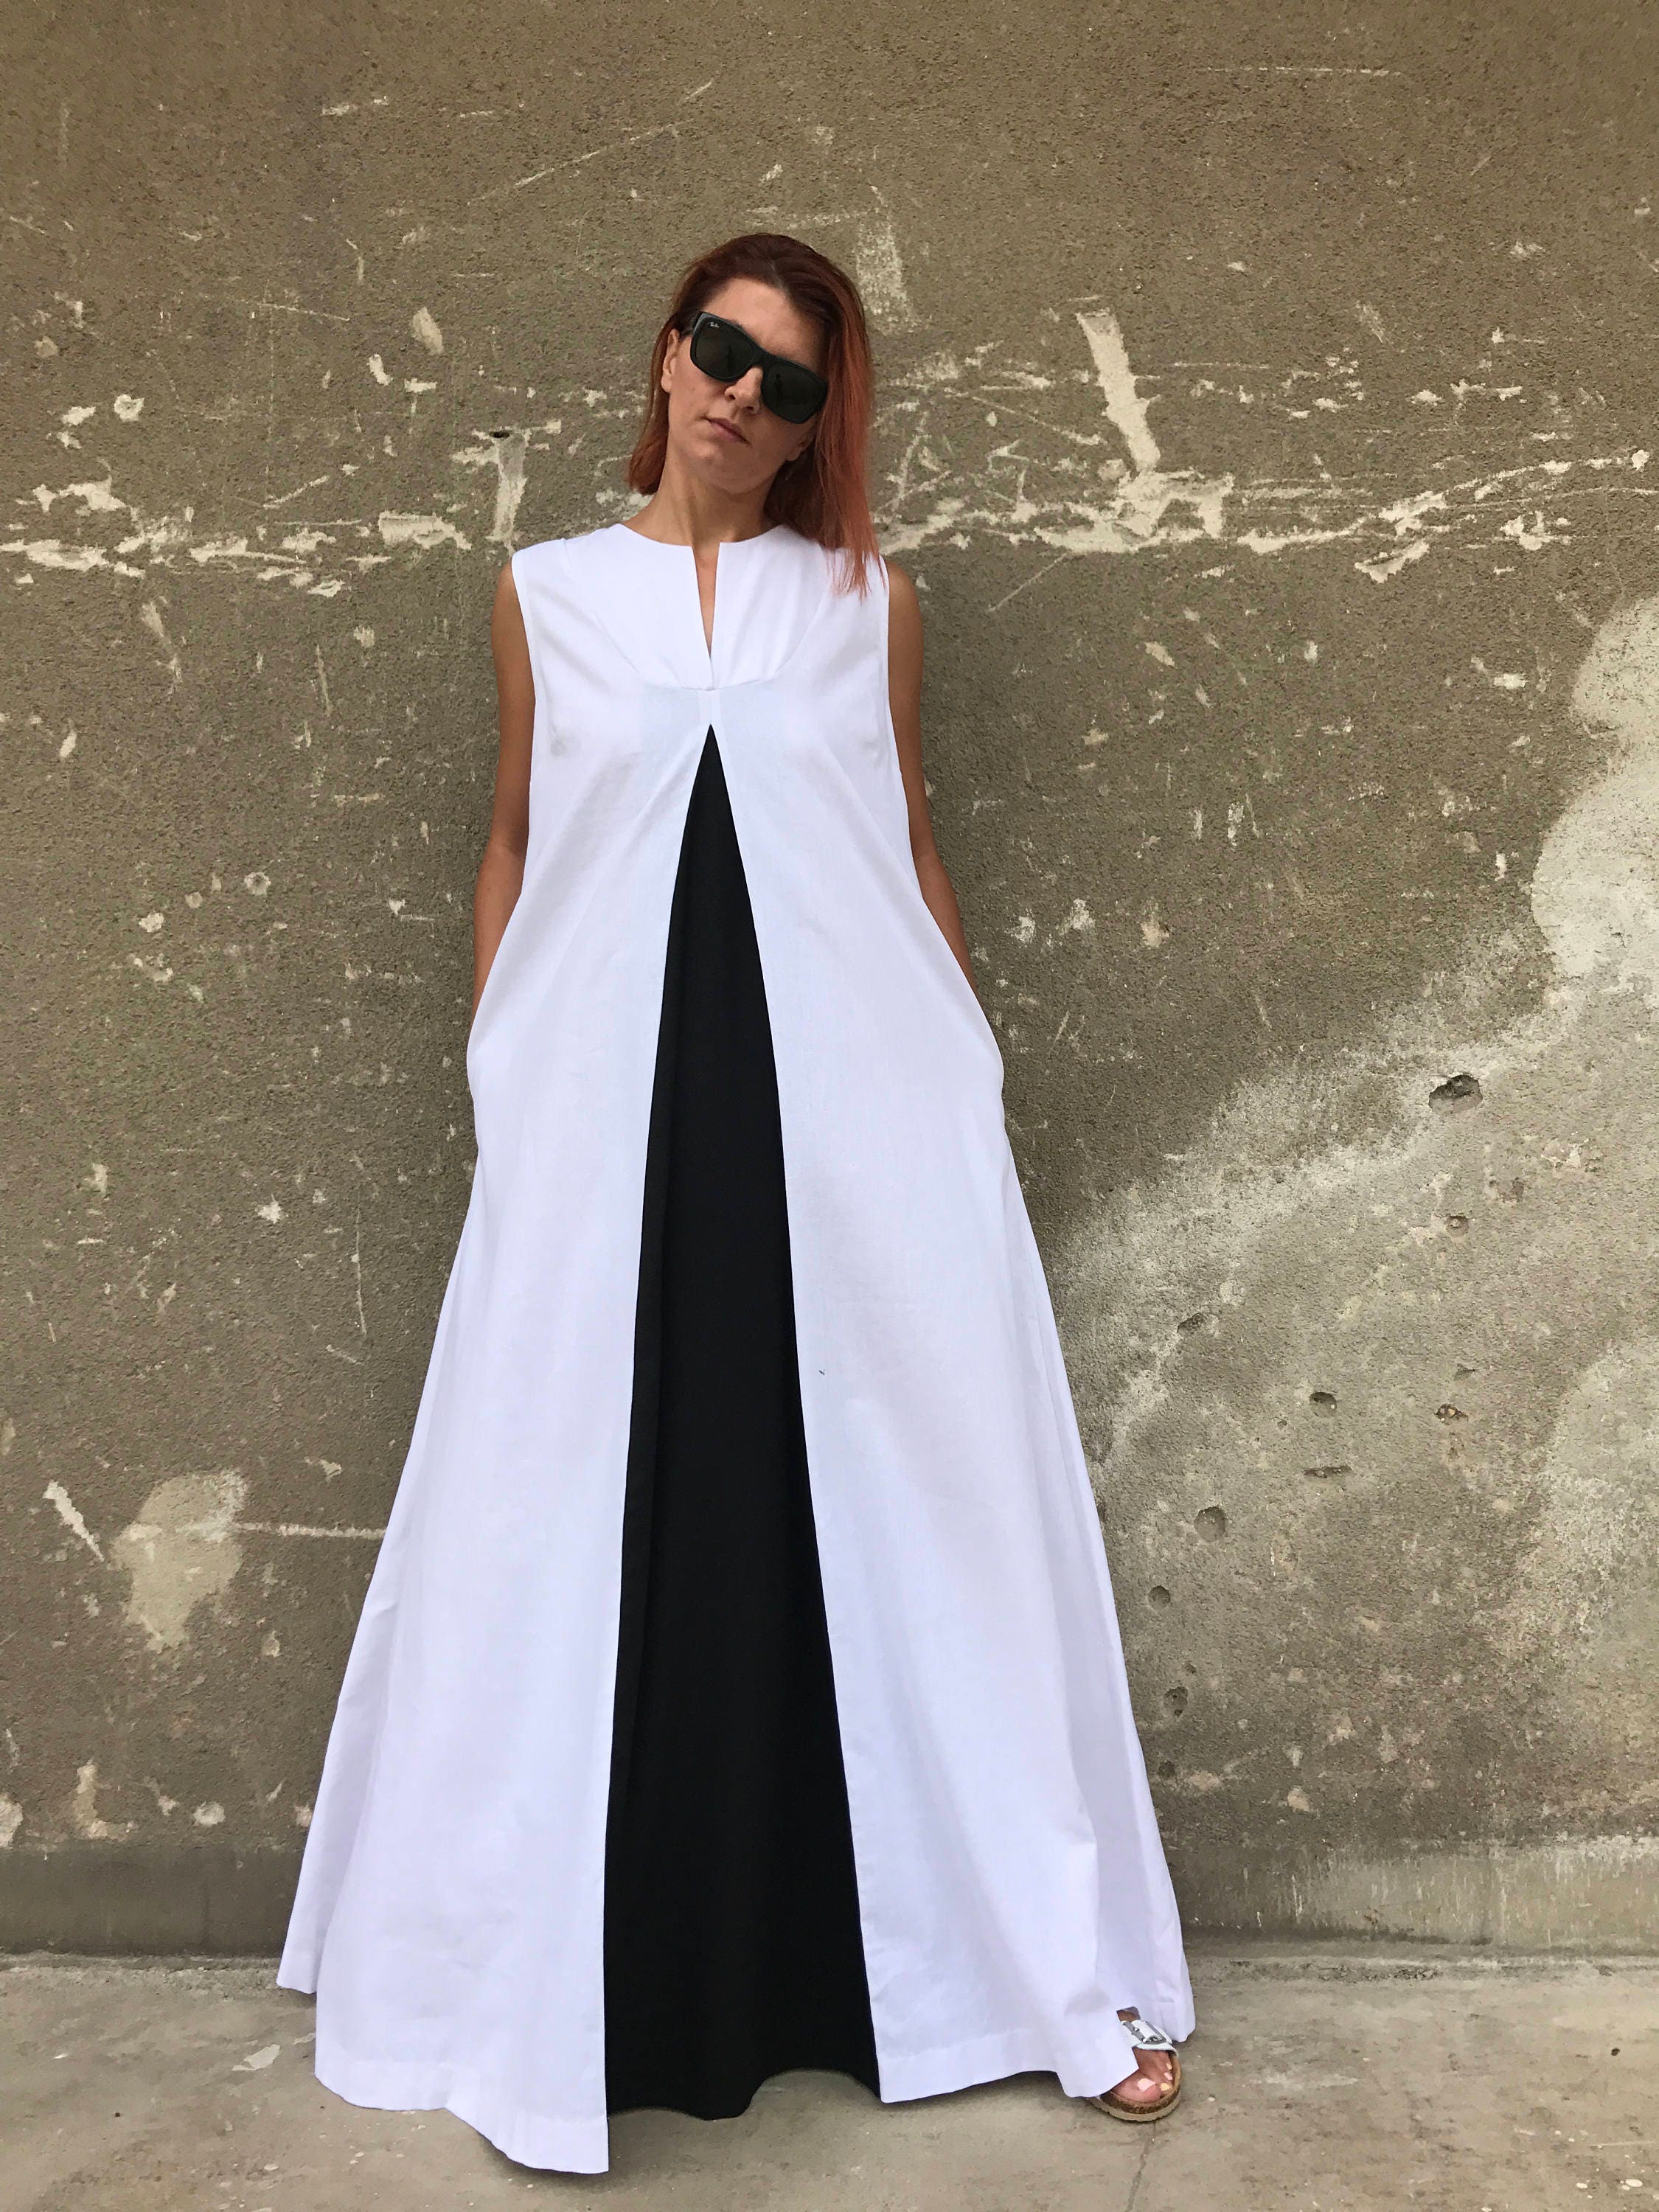 White Linen Dress, Plus Size Linen Dress, Linen Maxi Dress, White